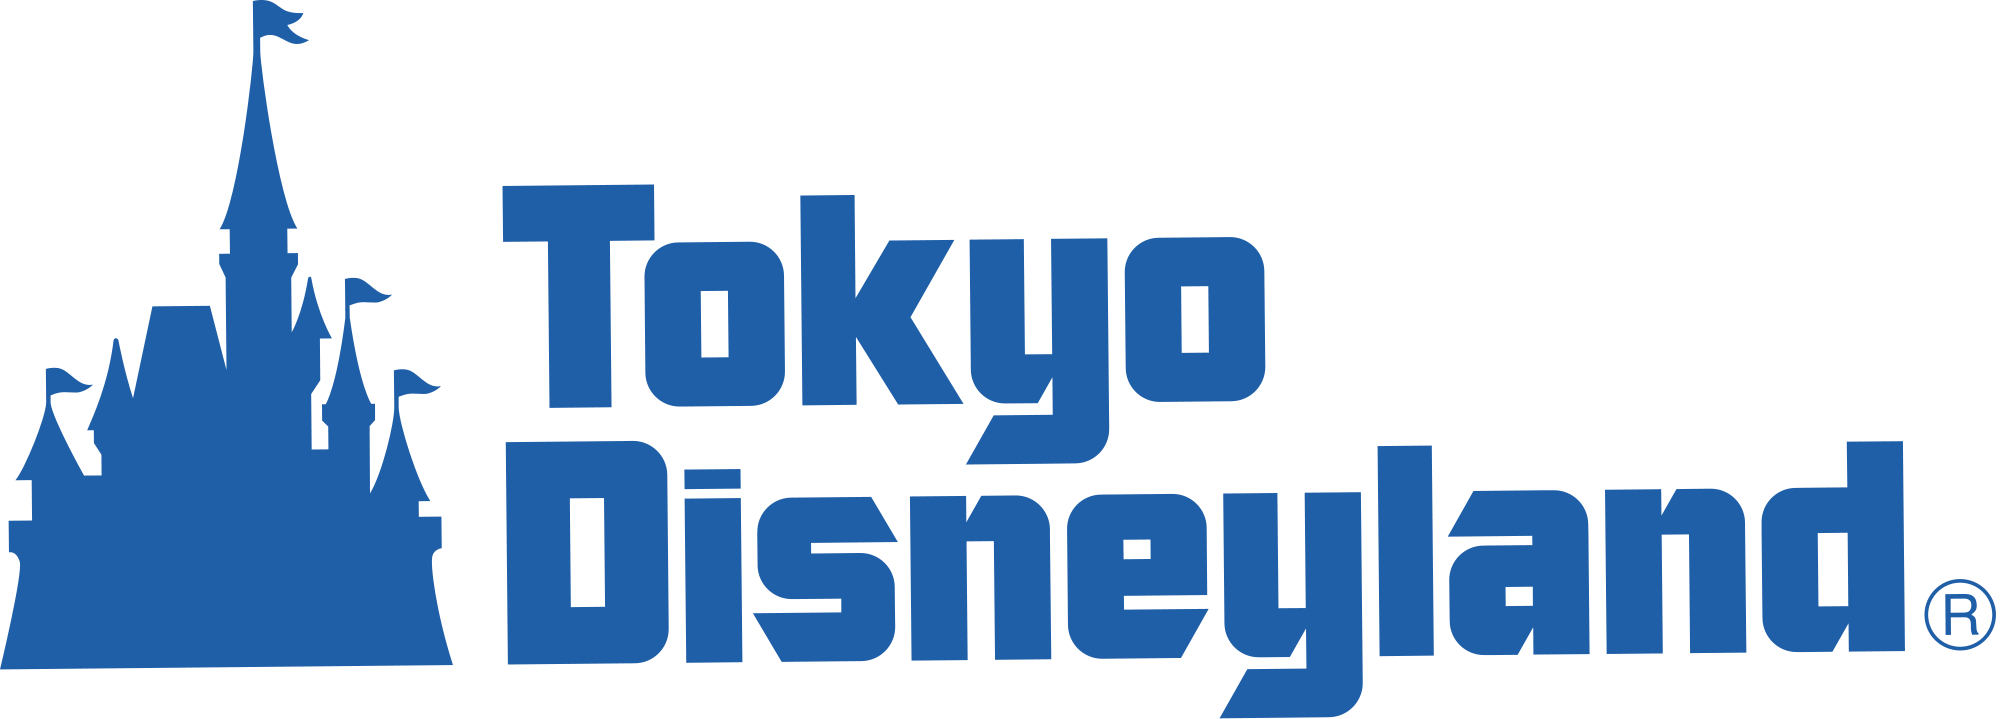 Tokyo Disneyland logo